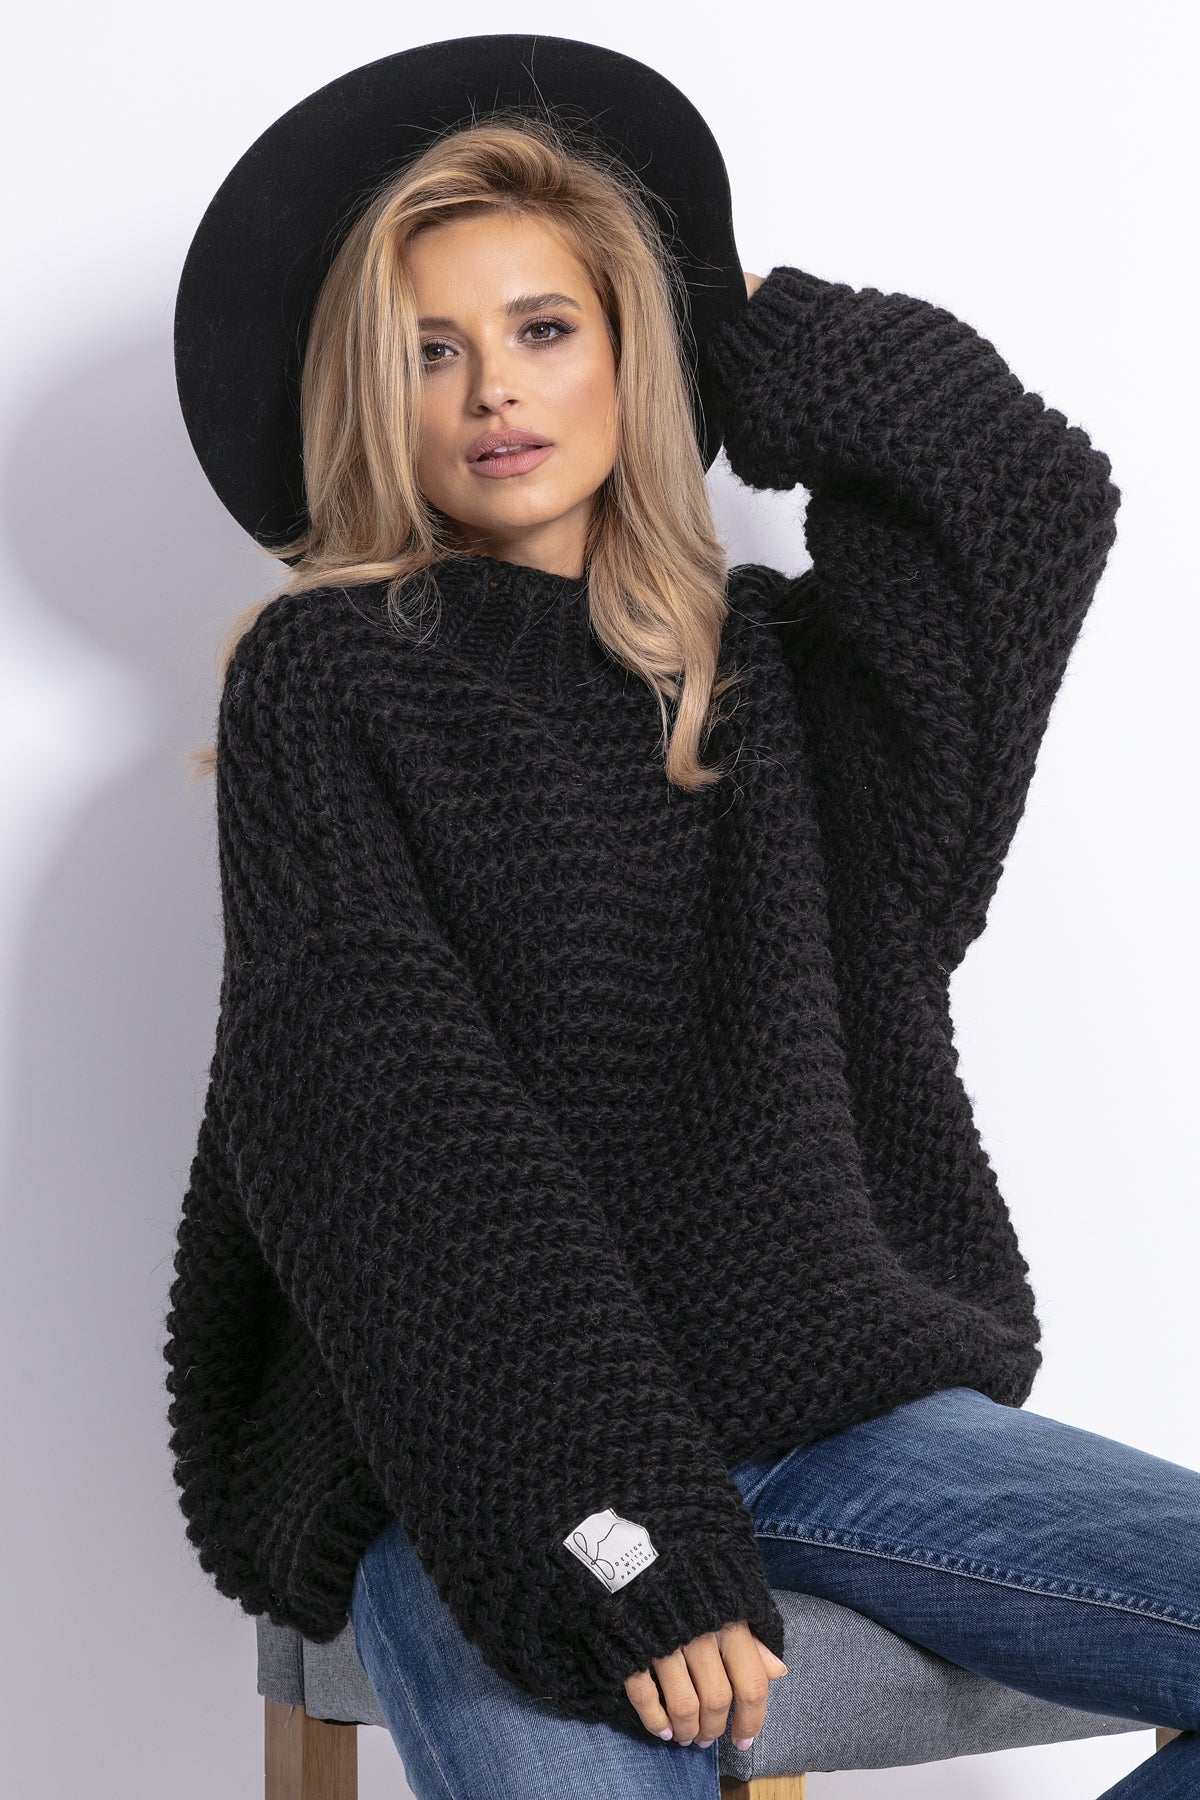 Oversize chunky knit sweater